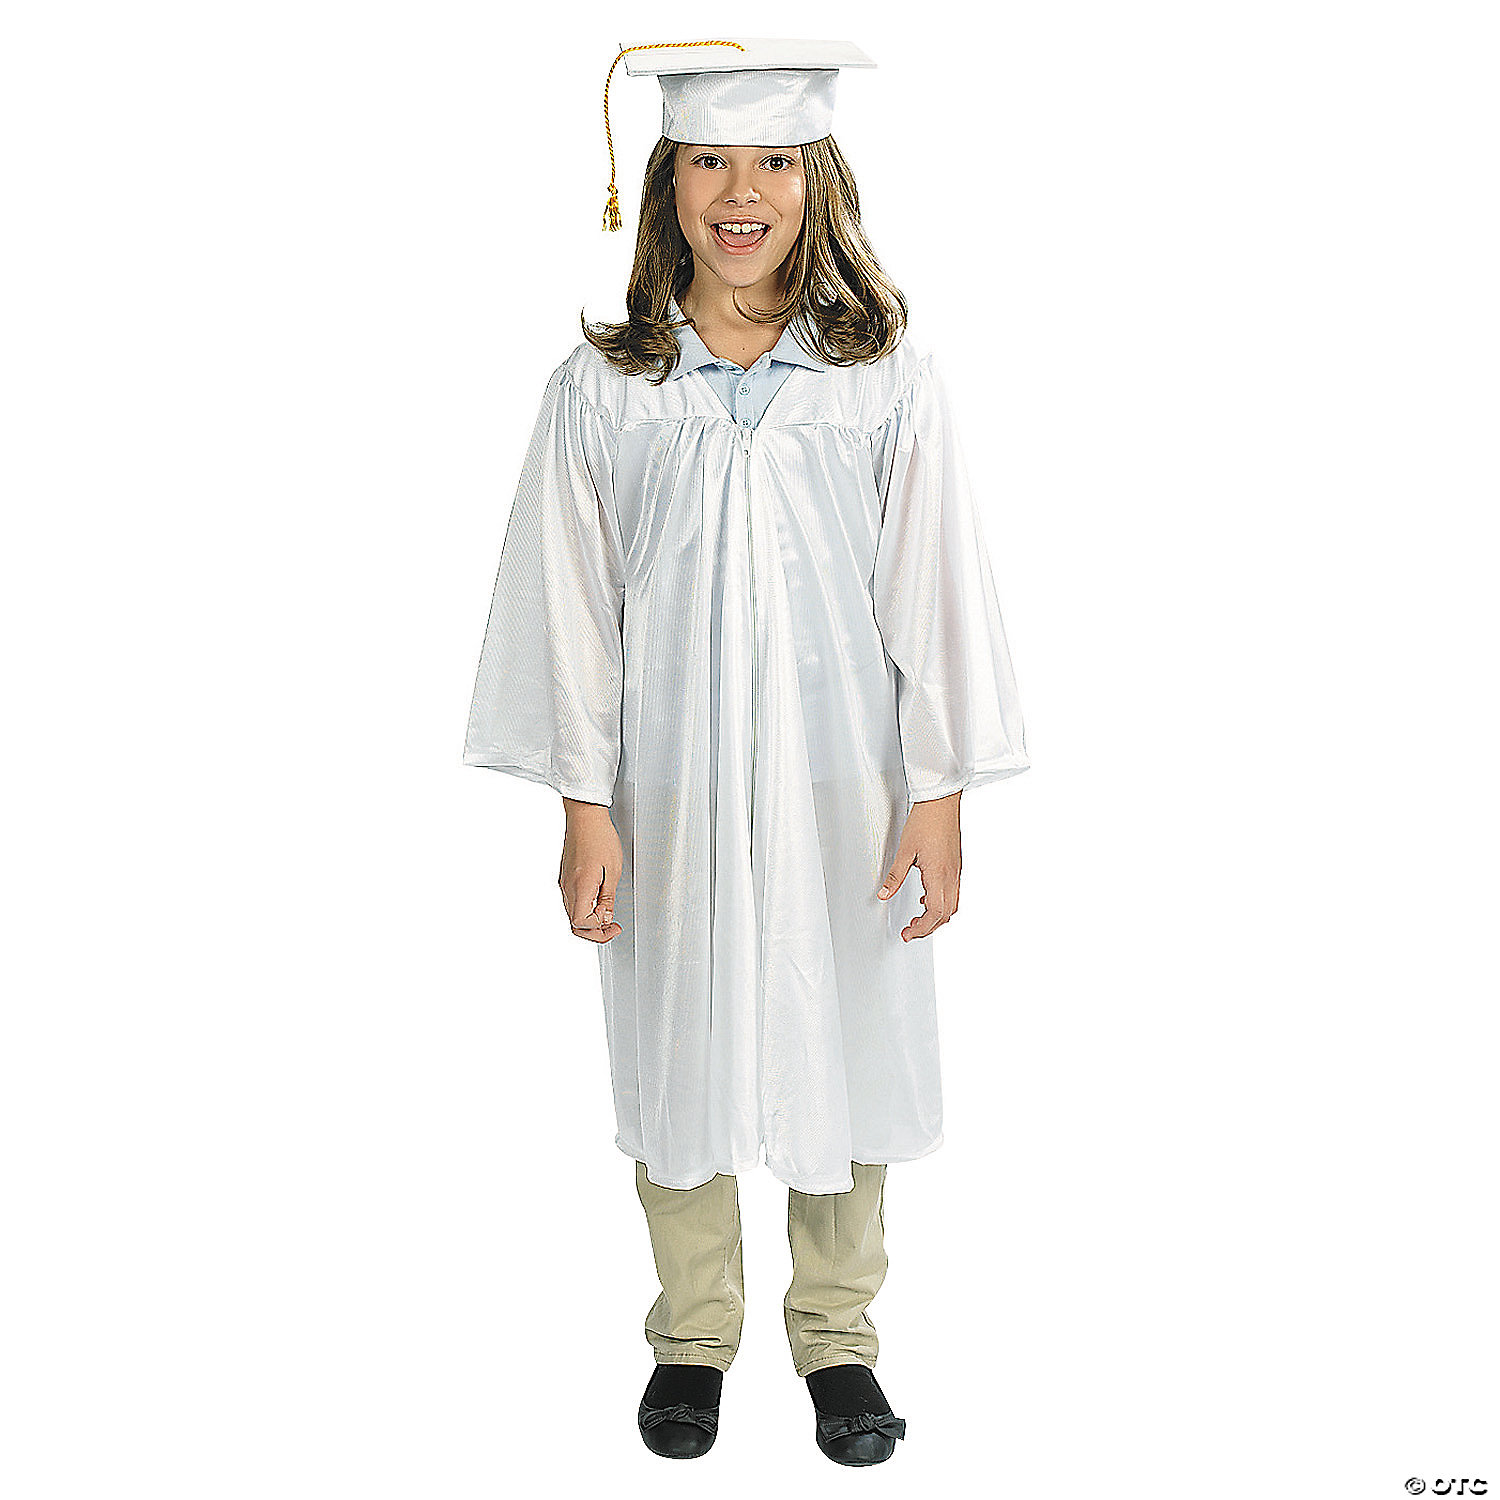 white dress for elementary graduation